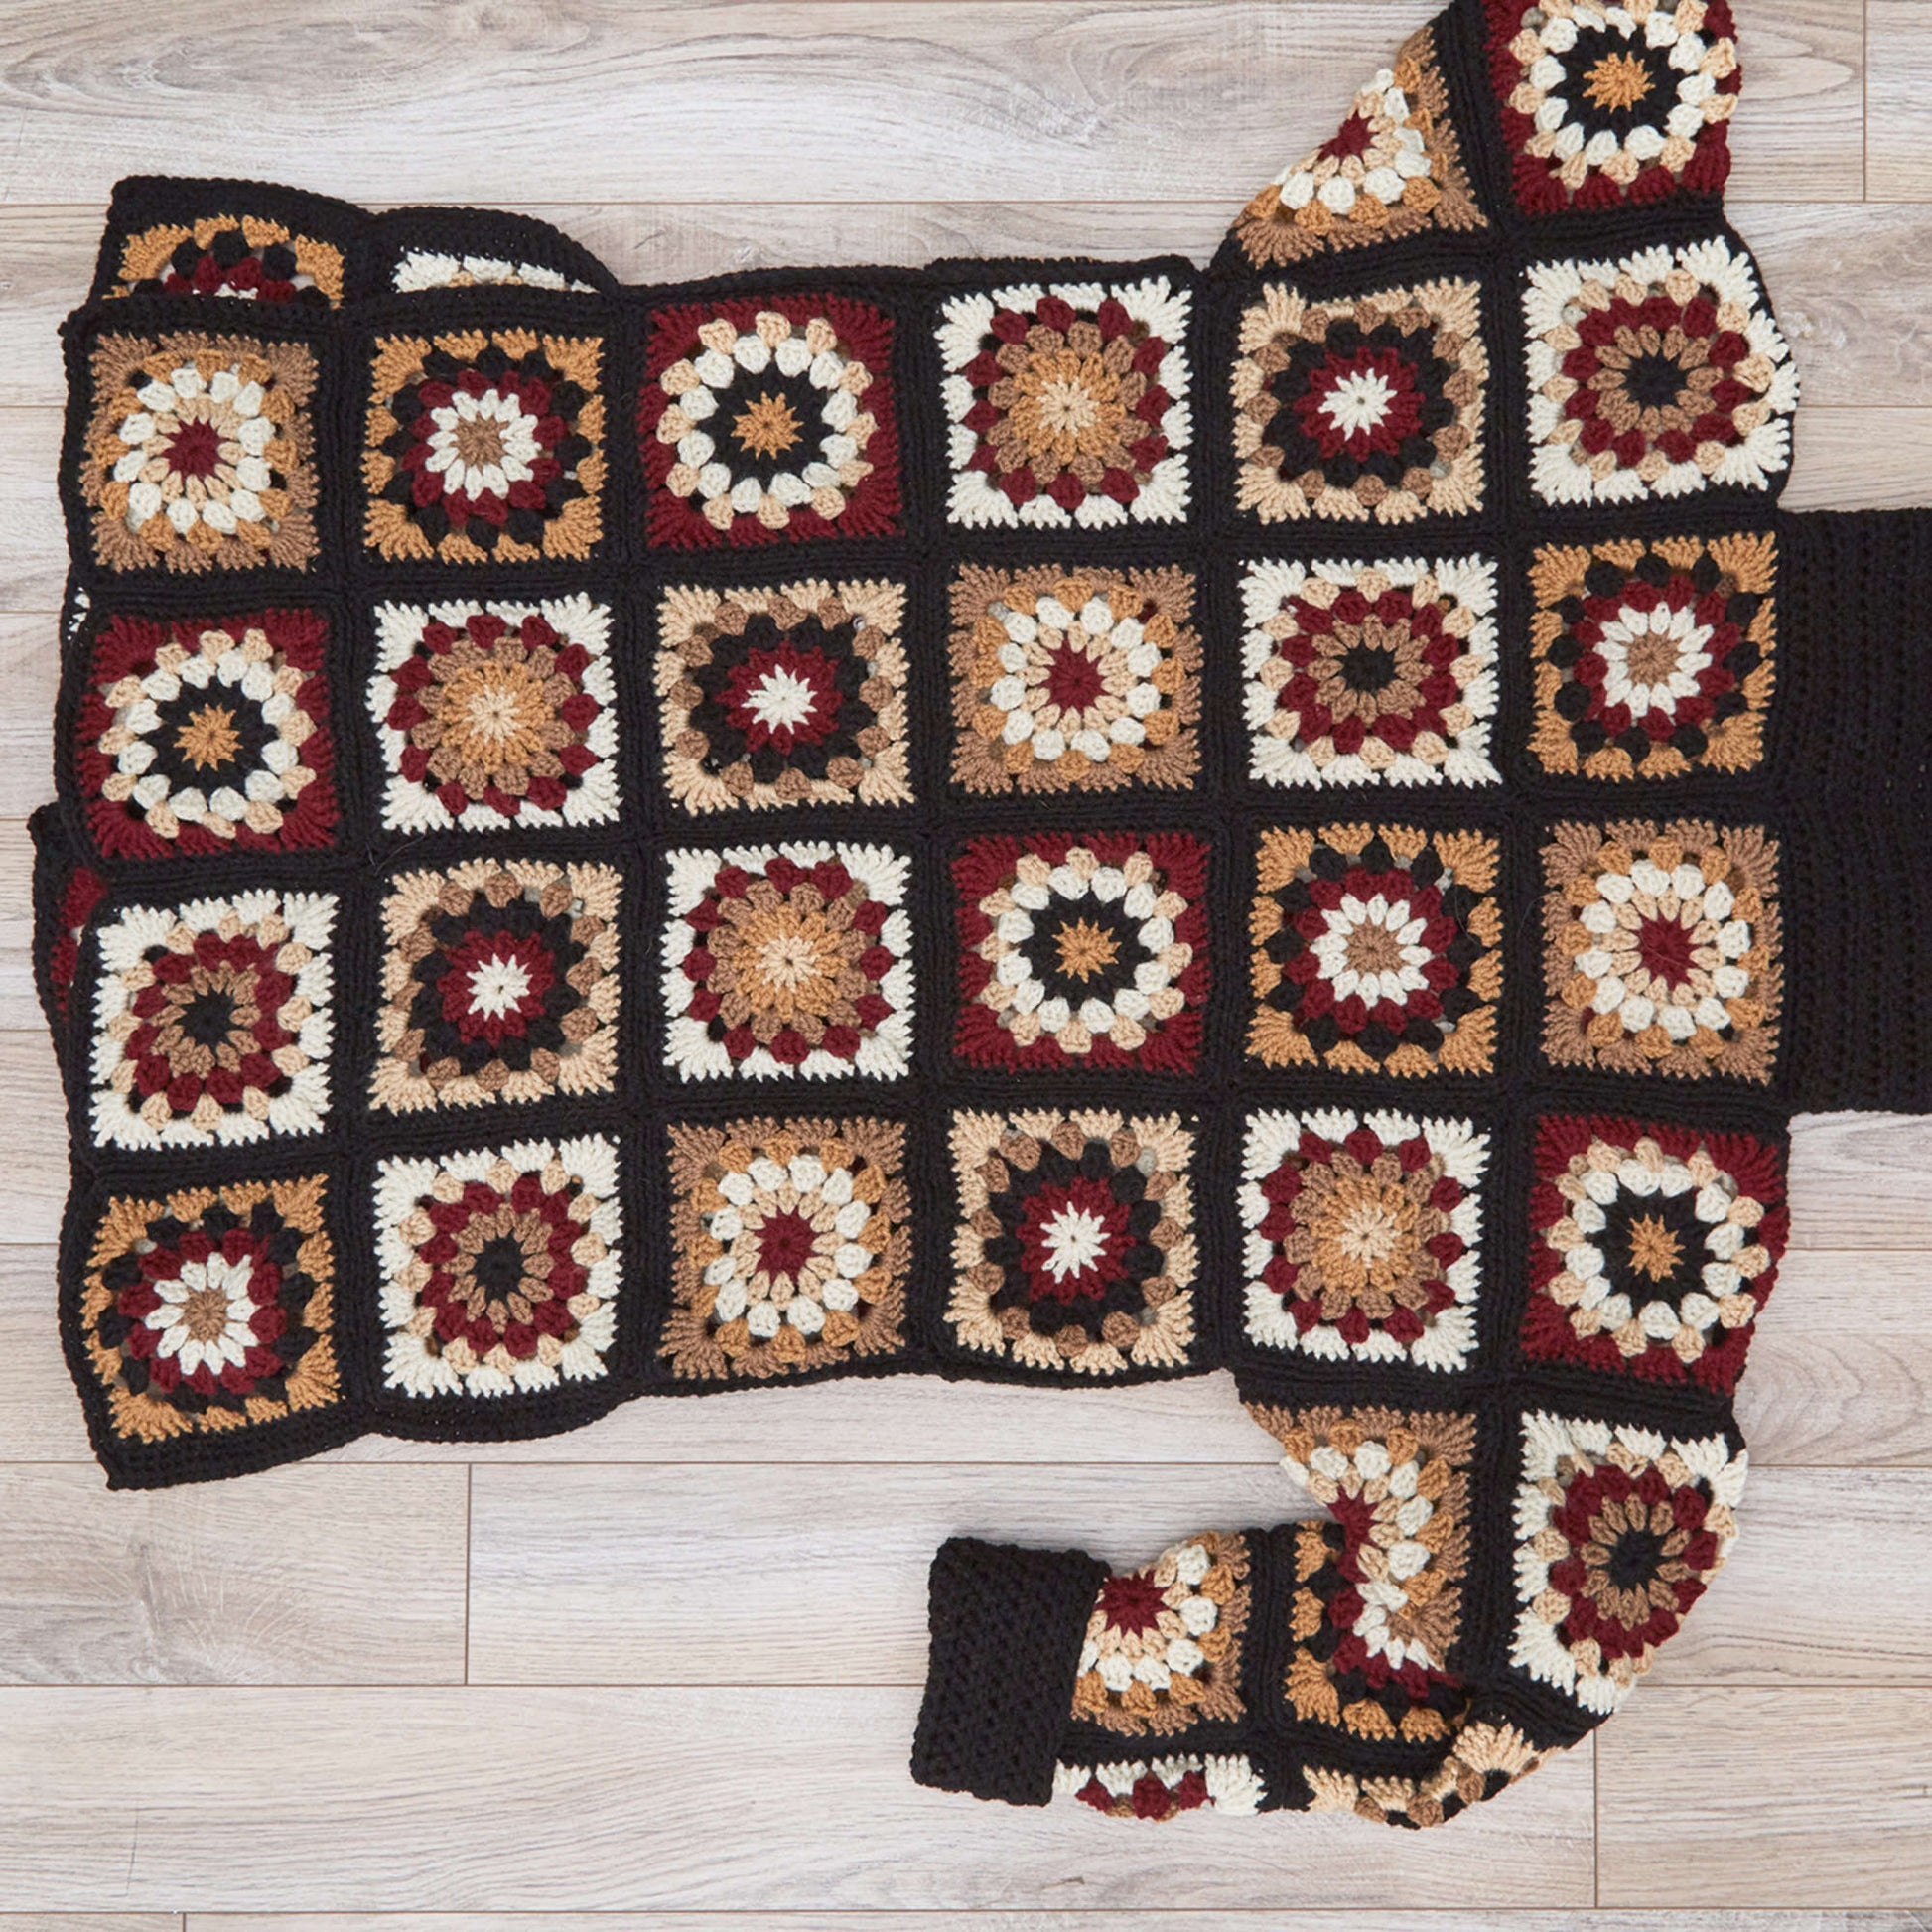 Free Red Heart Granny Neutrals Scarf Crochet Pattern